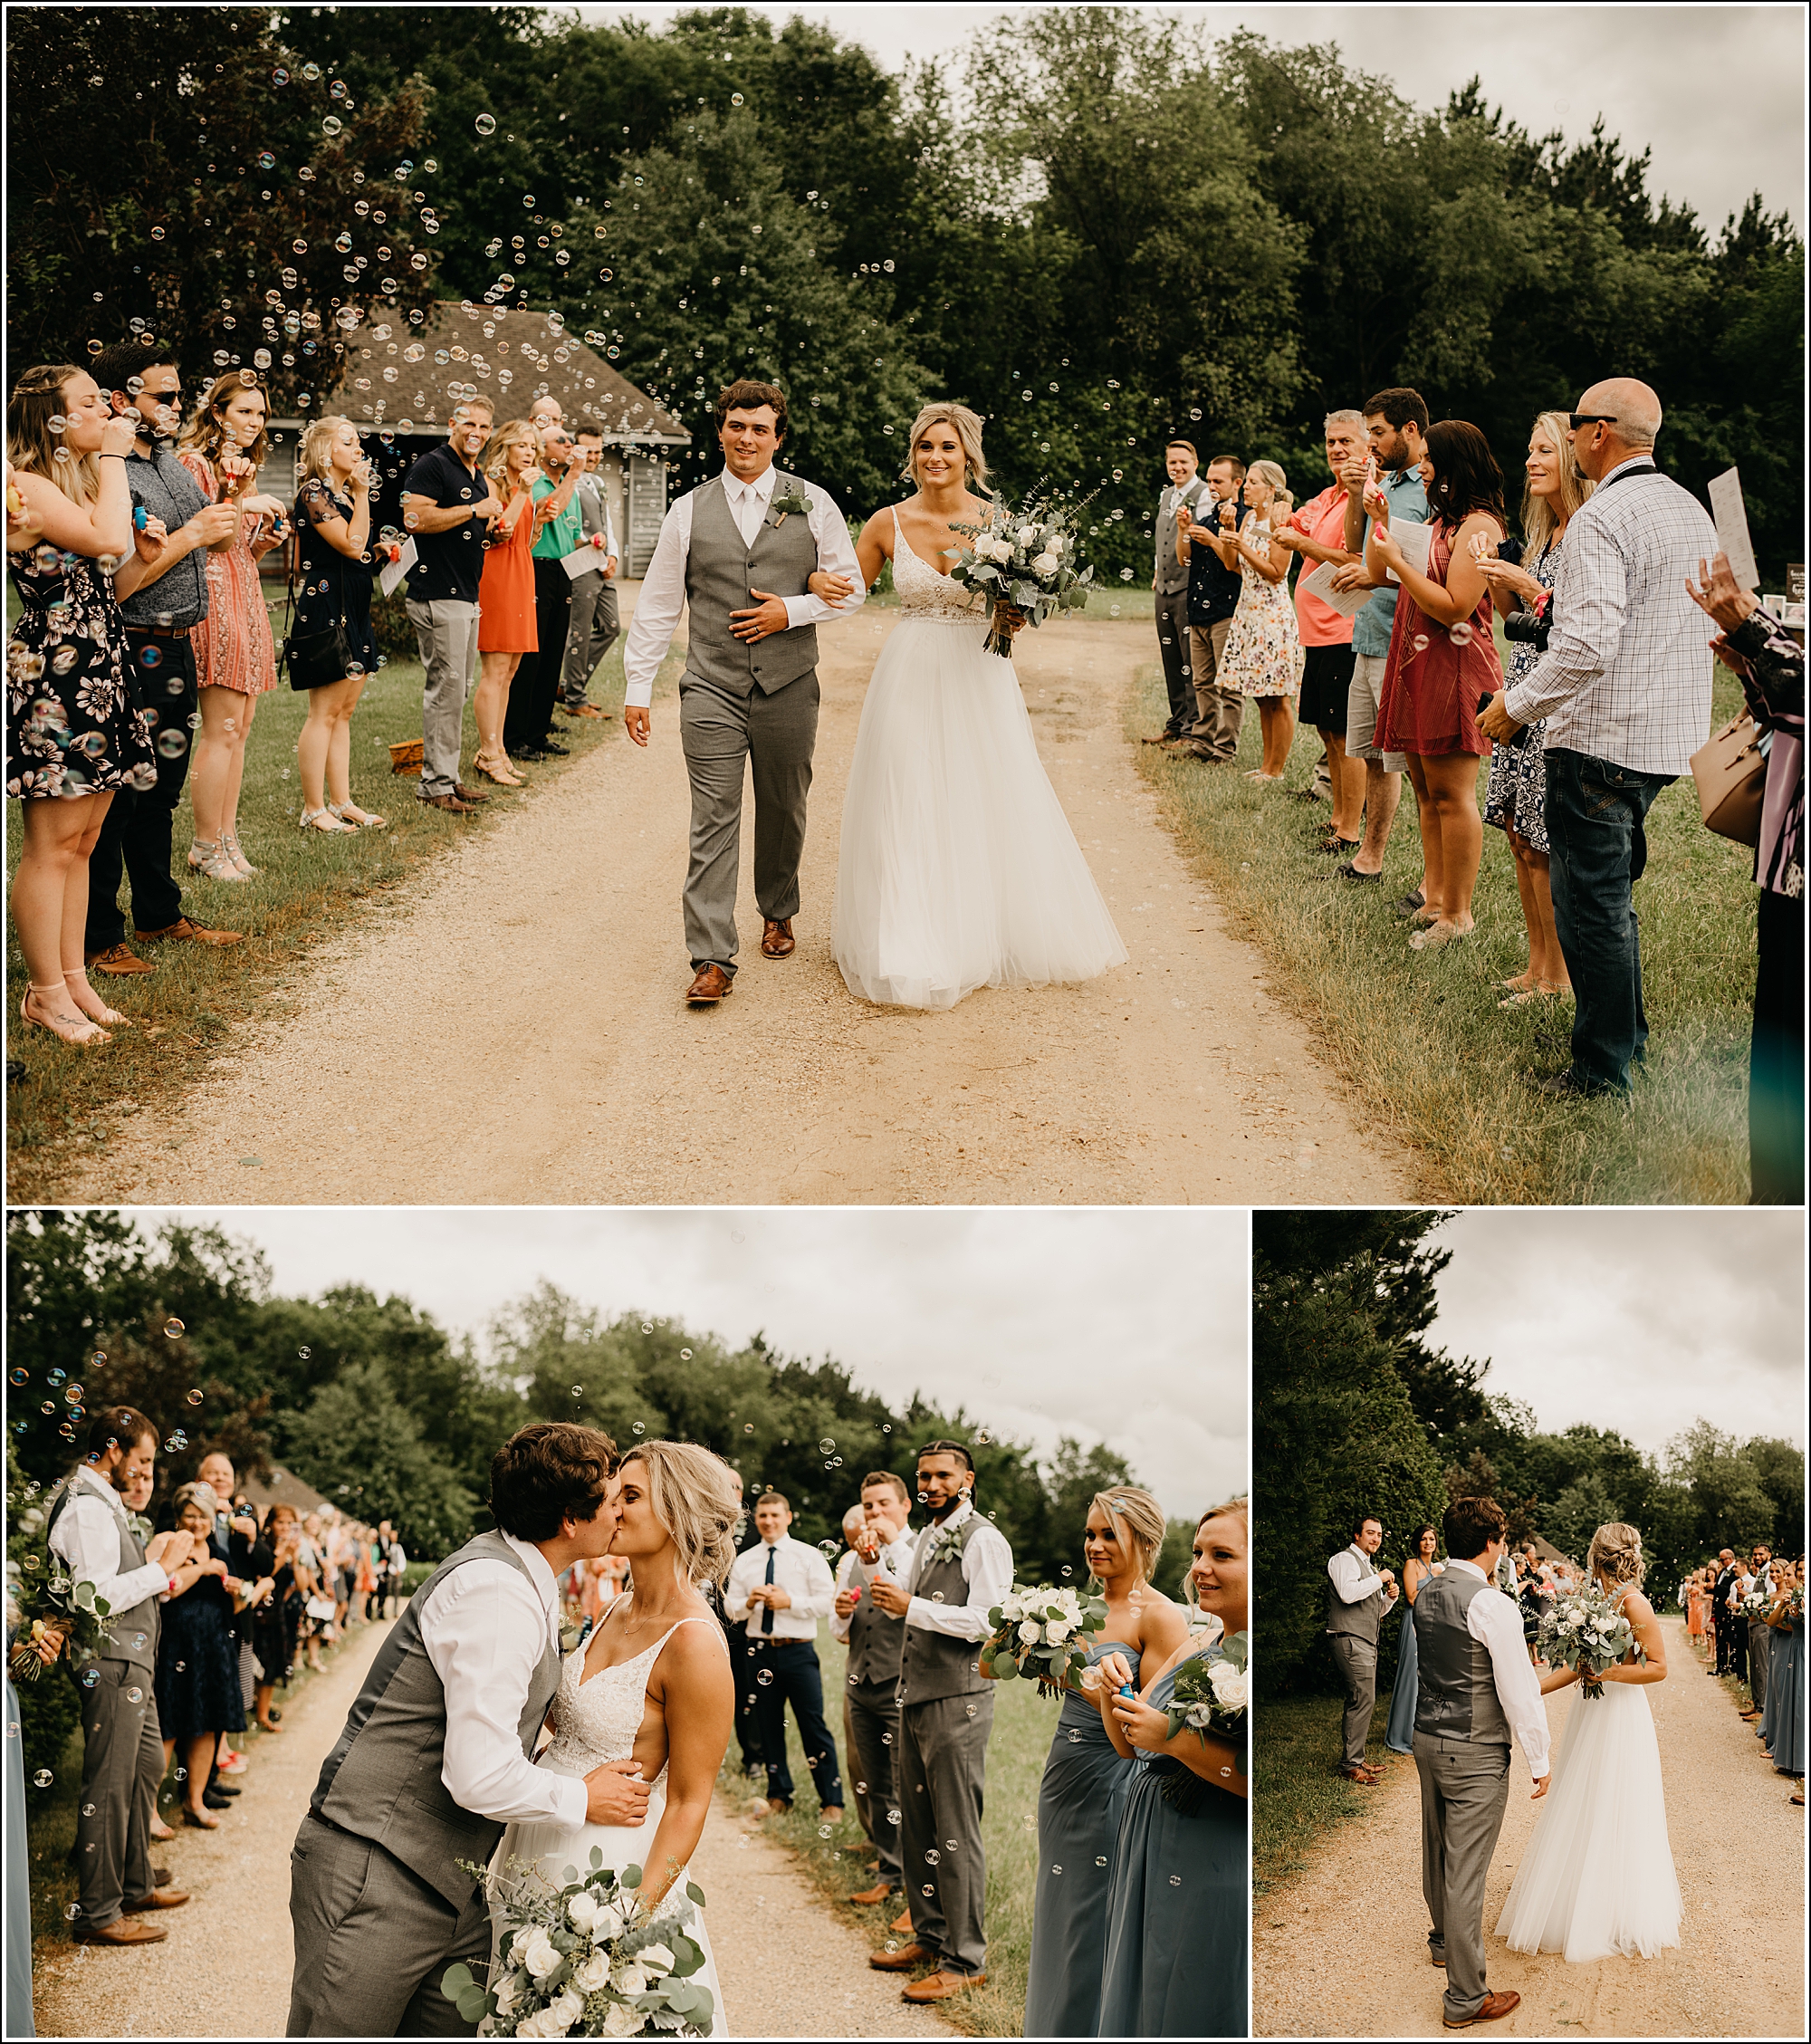 La Crosse WI wedding photographer bubbles celebration bride and groom walking